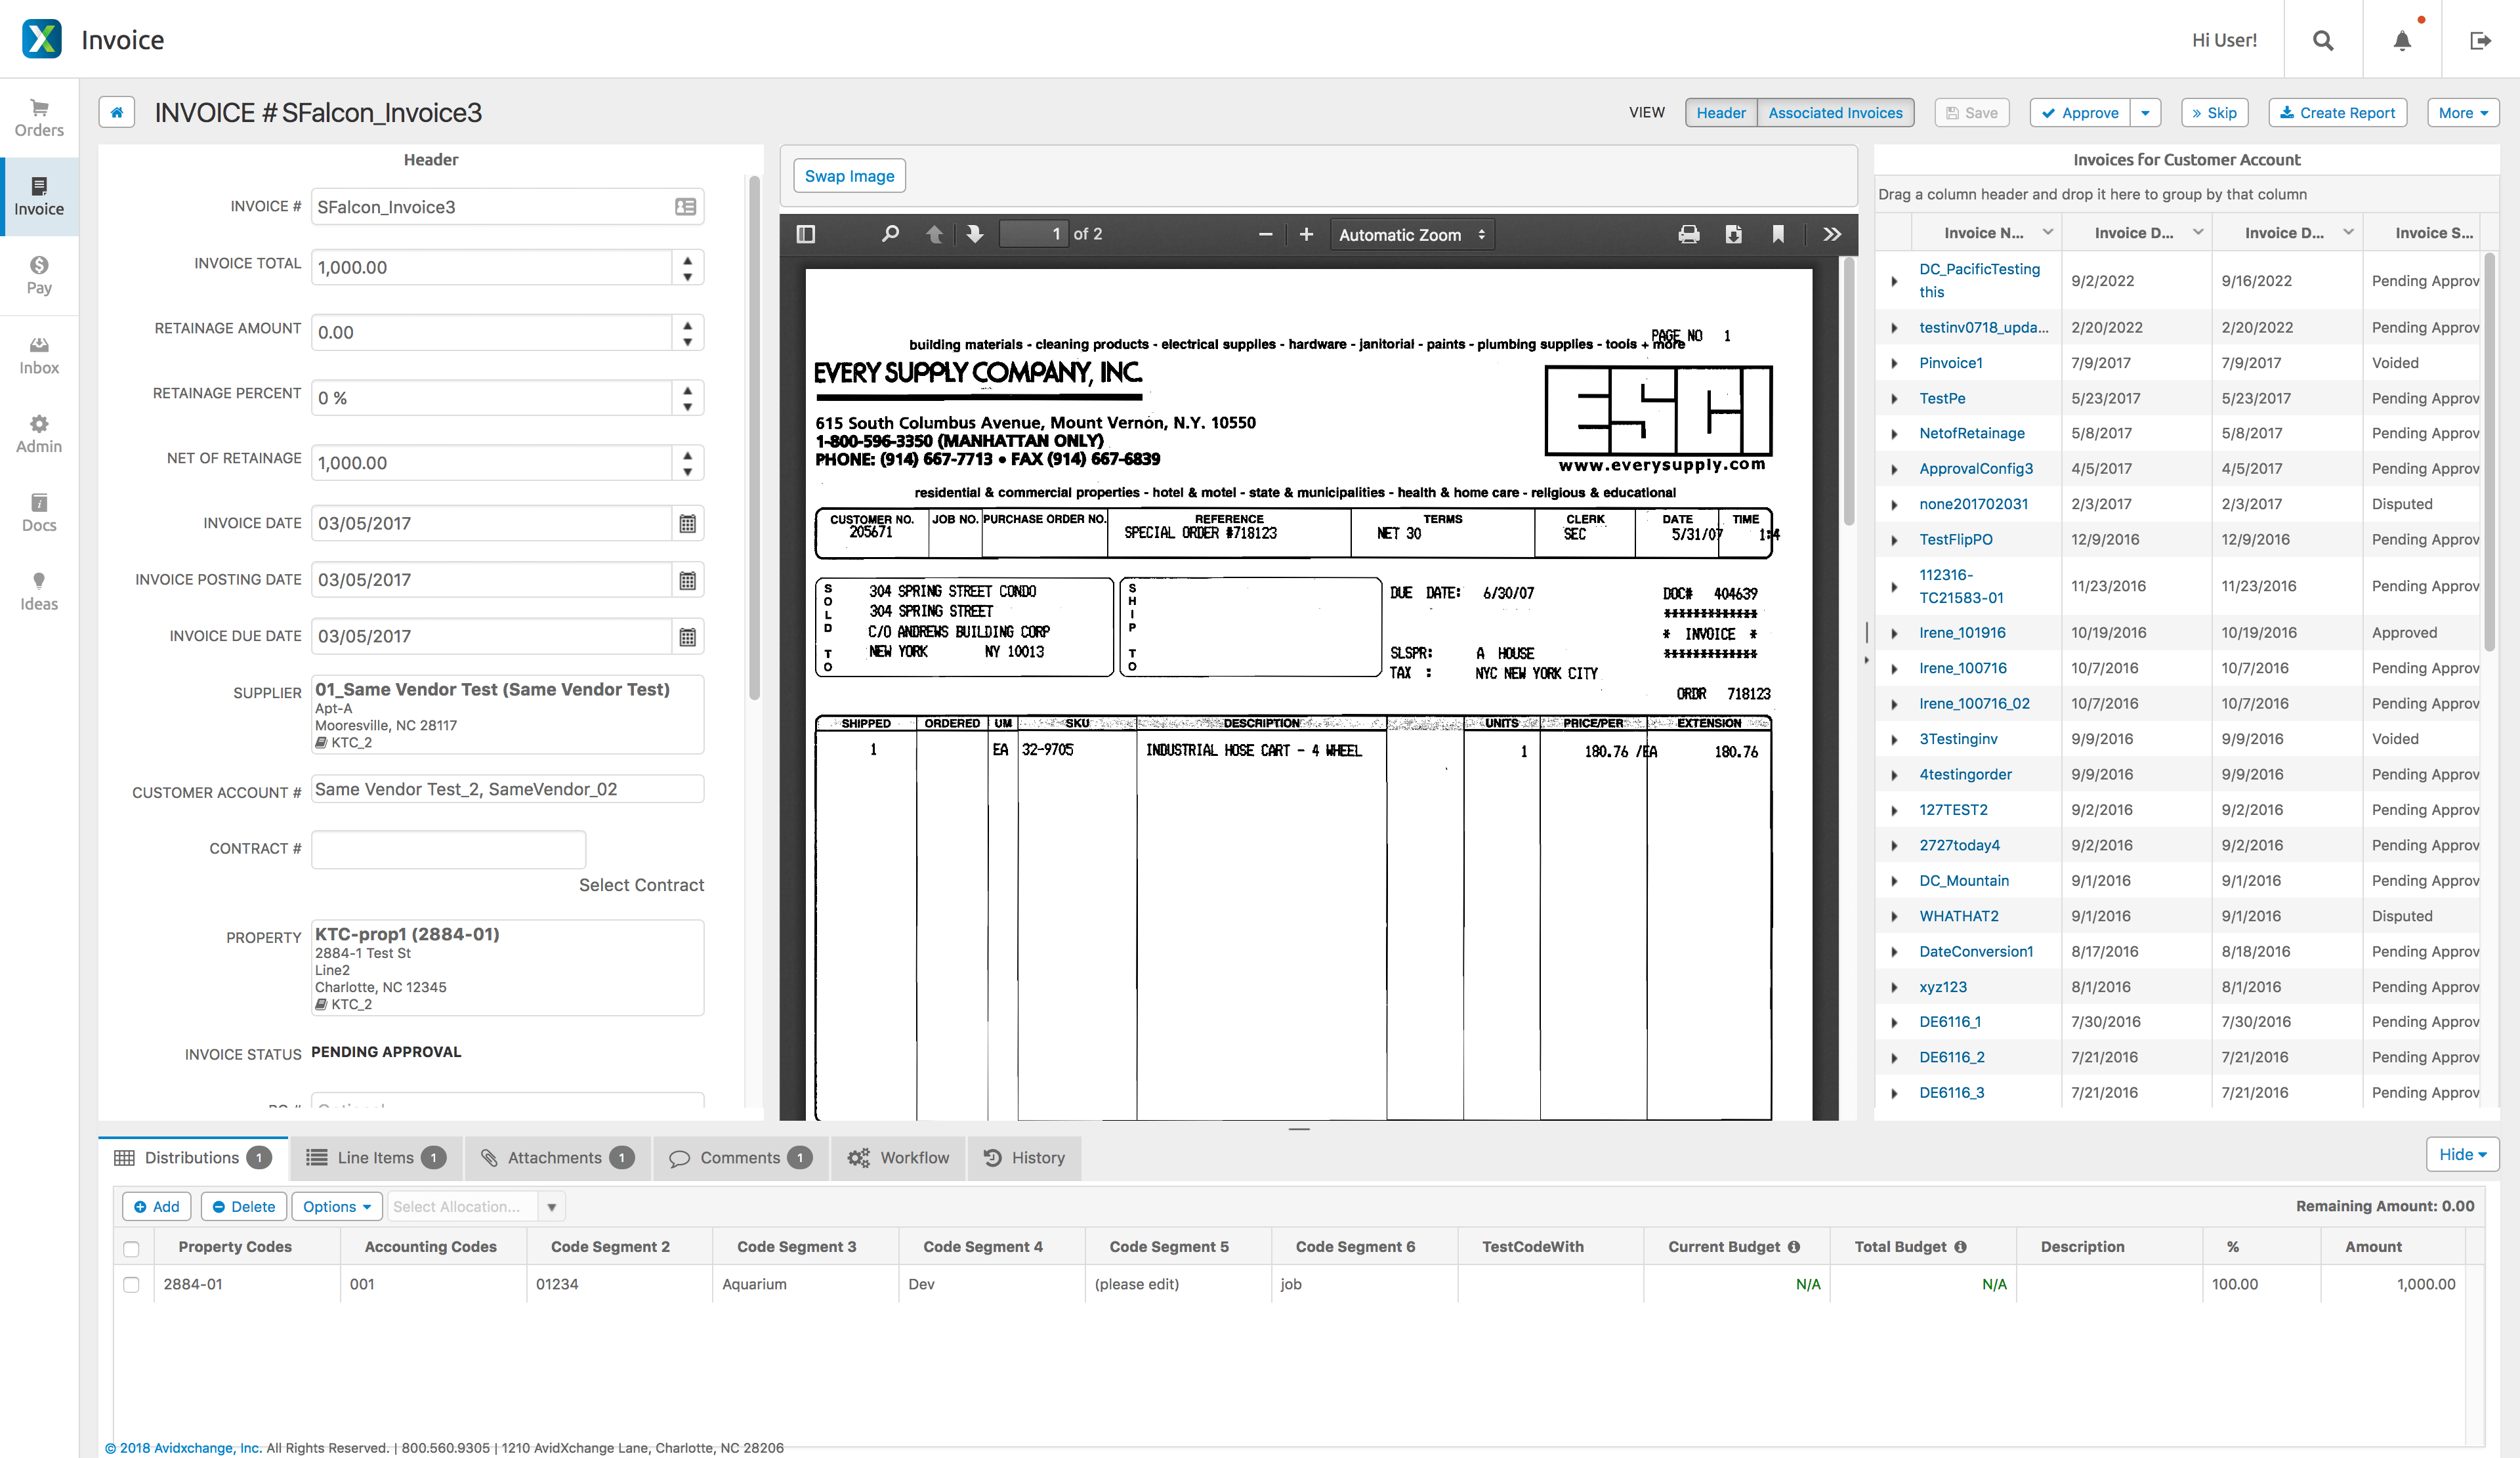 AvidXchange invoice detail & associated invoices screenshot